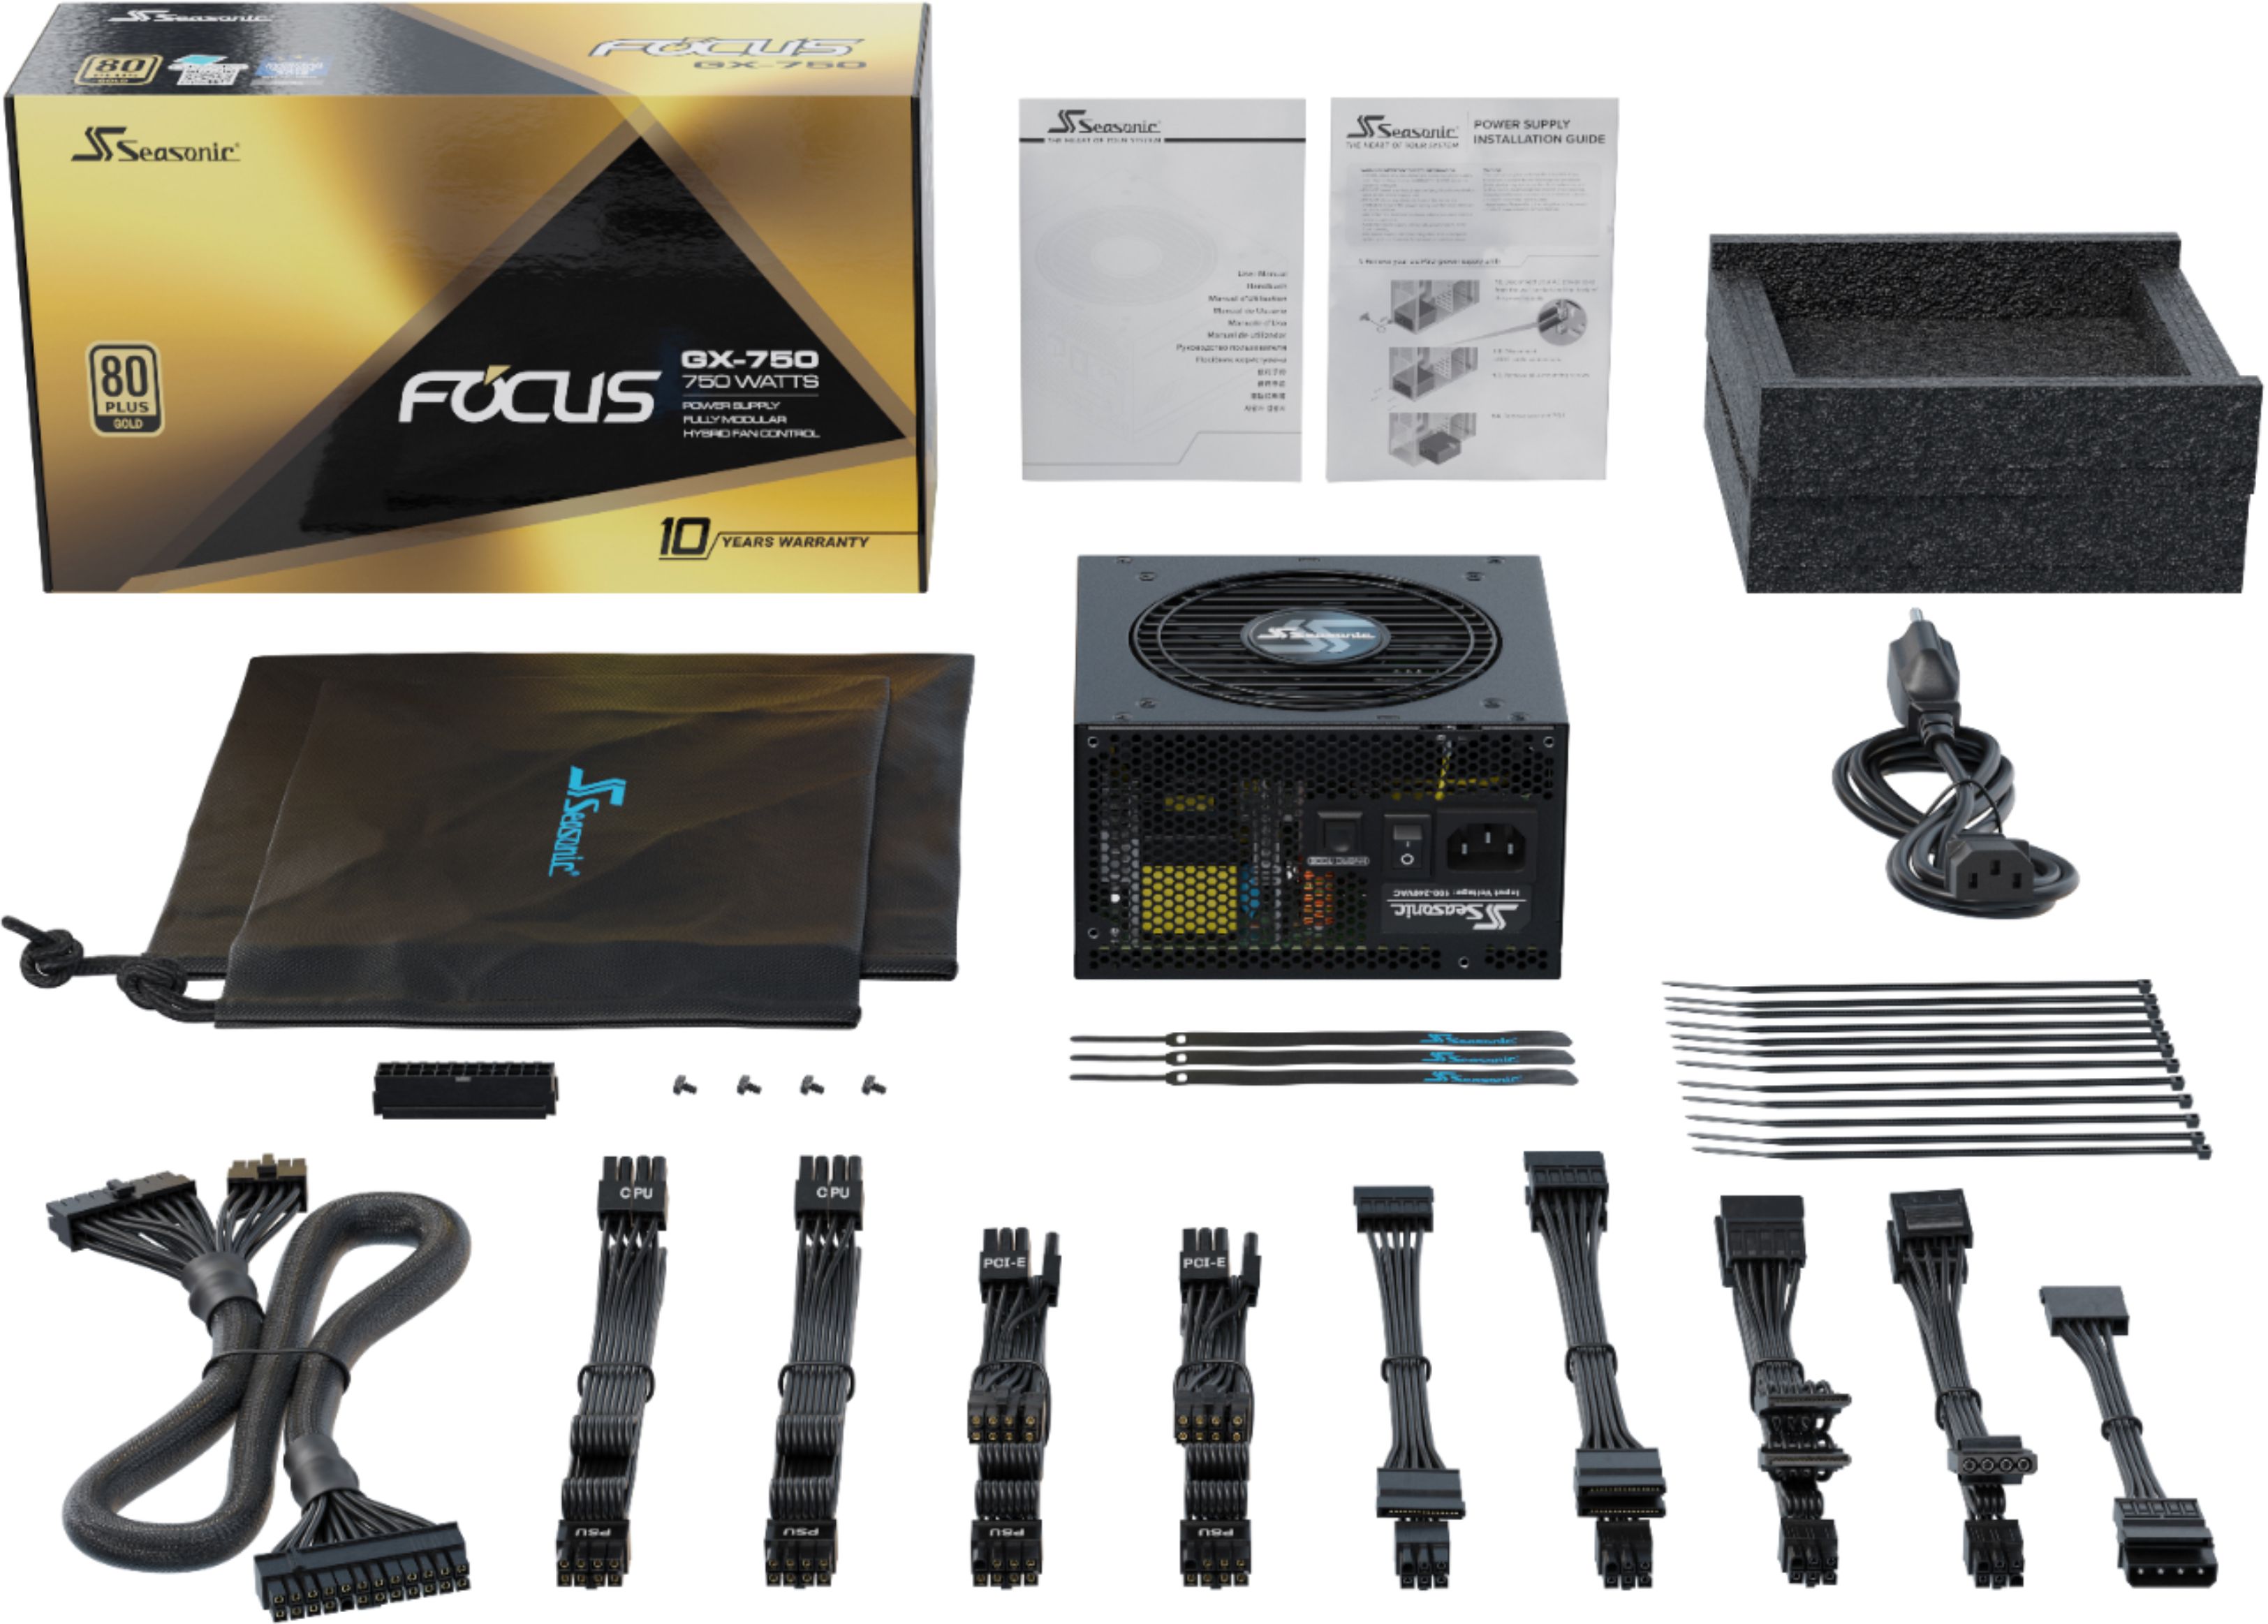 Seasonic Focus GX-750 - Power Supply Review